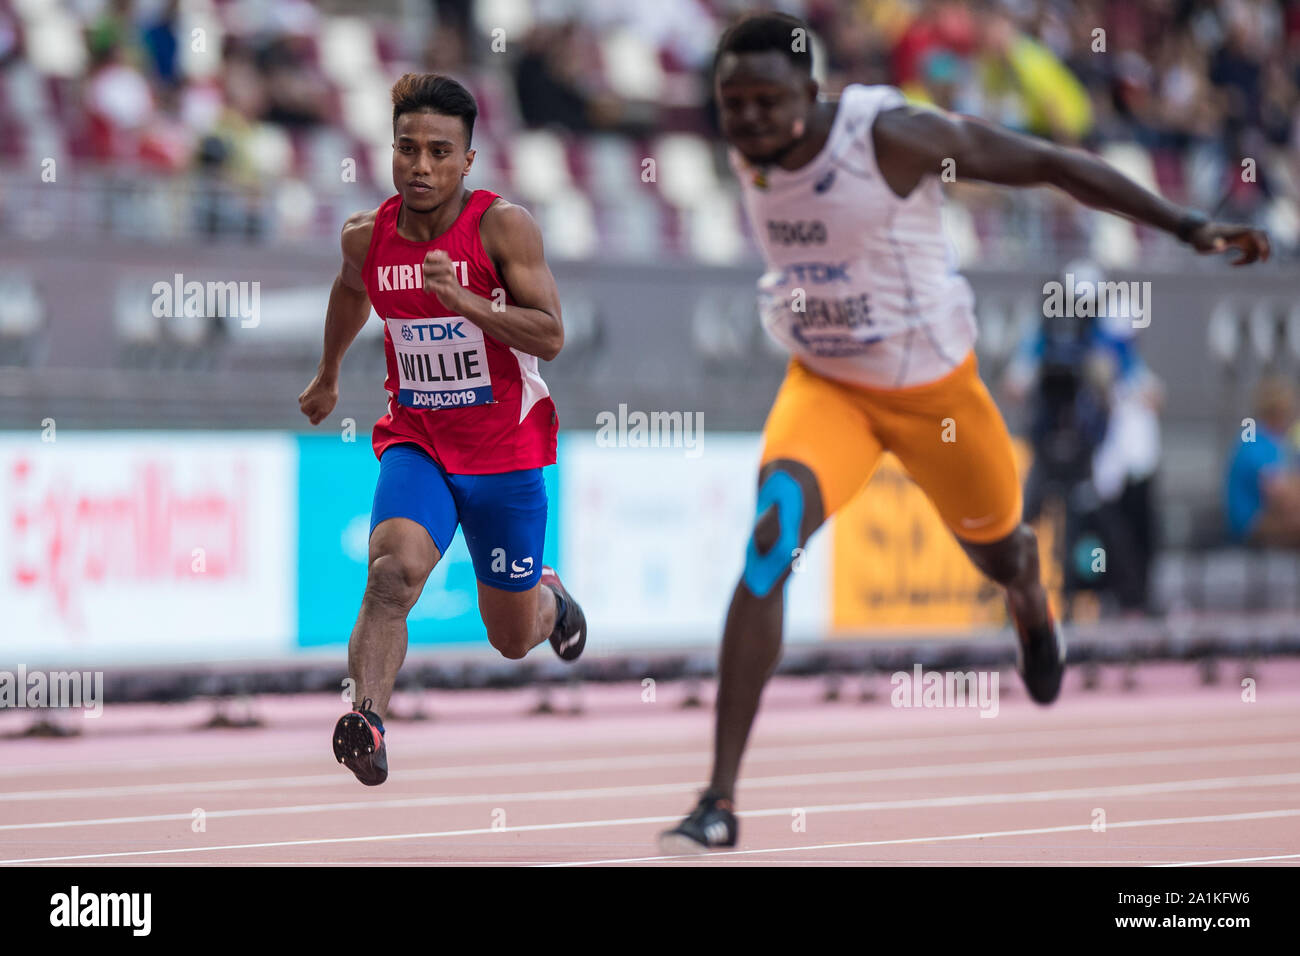 Doha, Qatar. 27th Sep, 2019. Athletics, IAAF World Championships, World Championships at Khalifa International Stadium 100 meters, men, lead